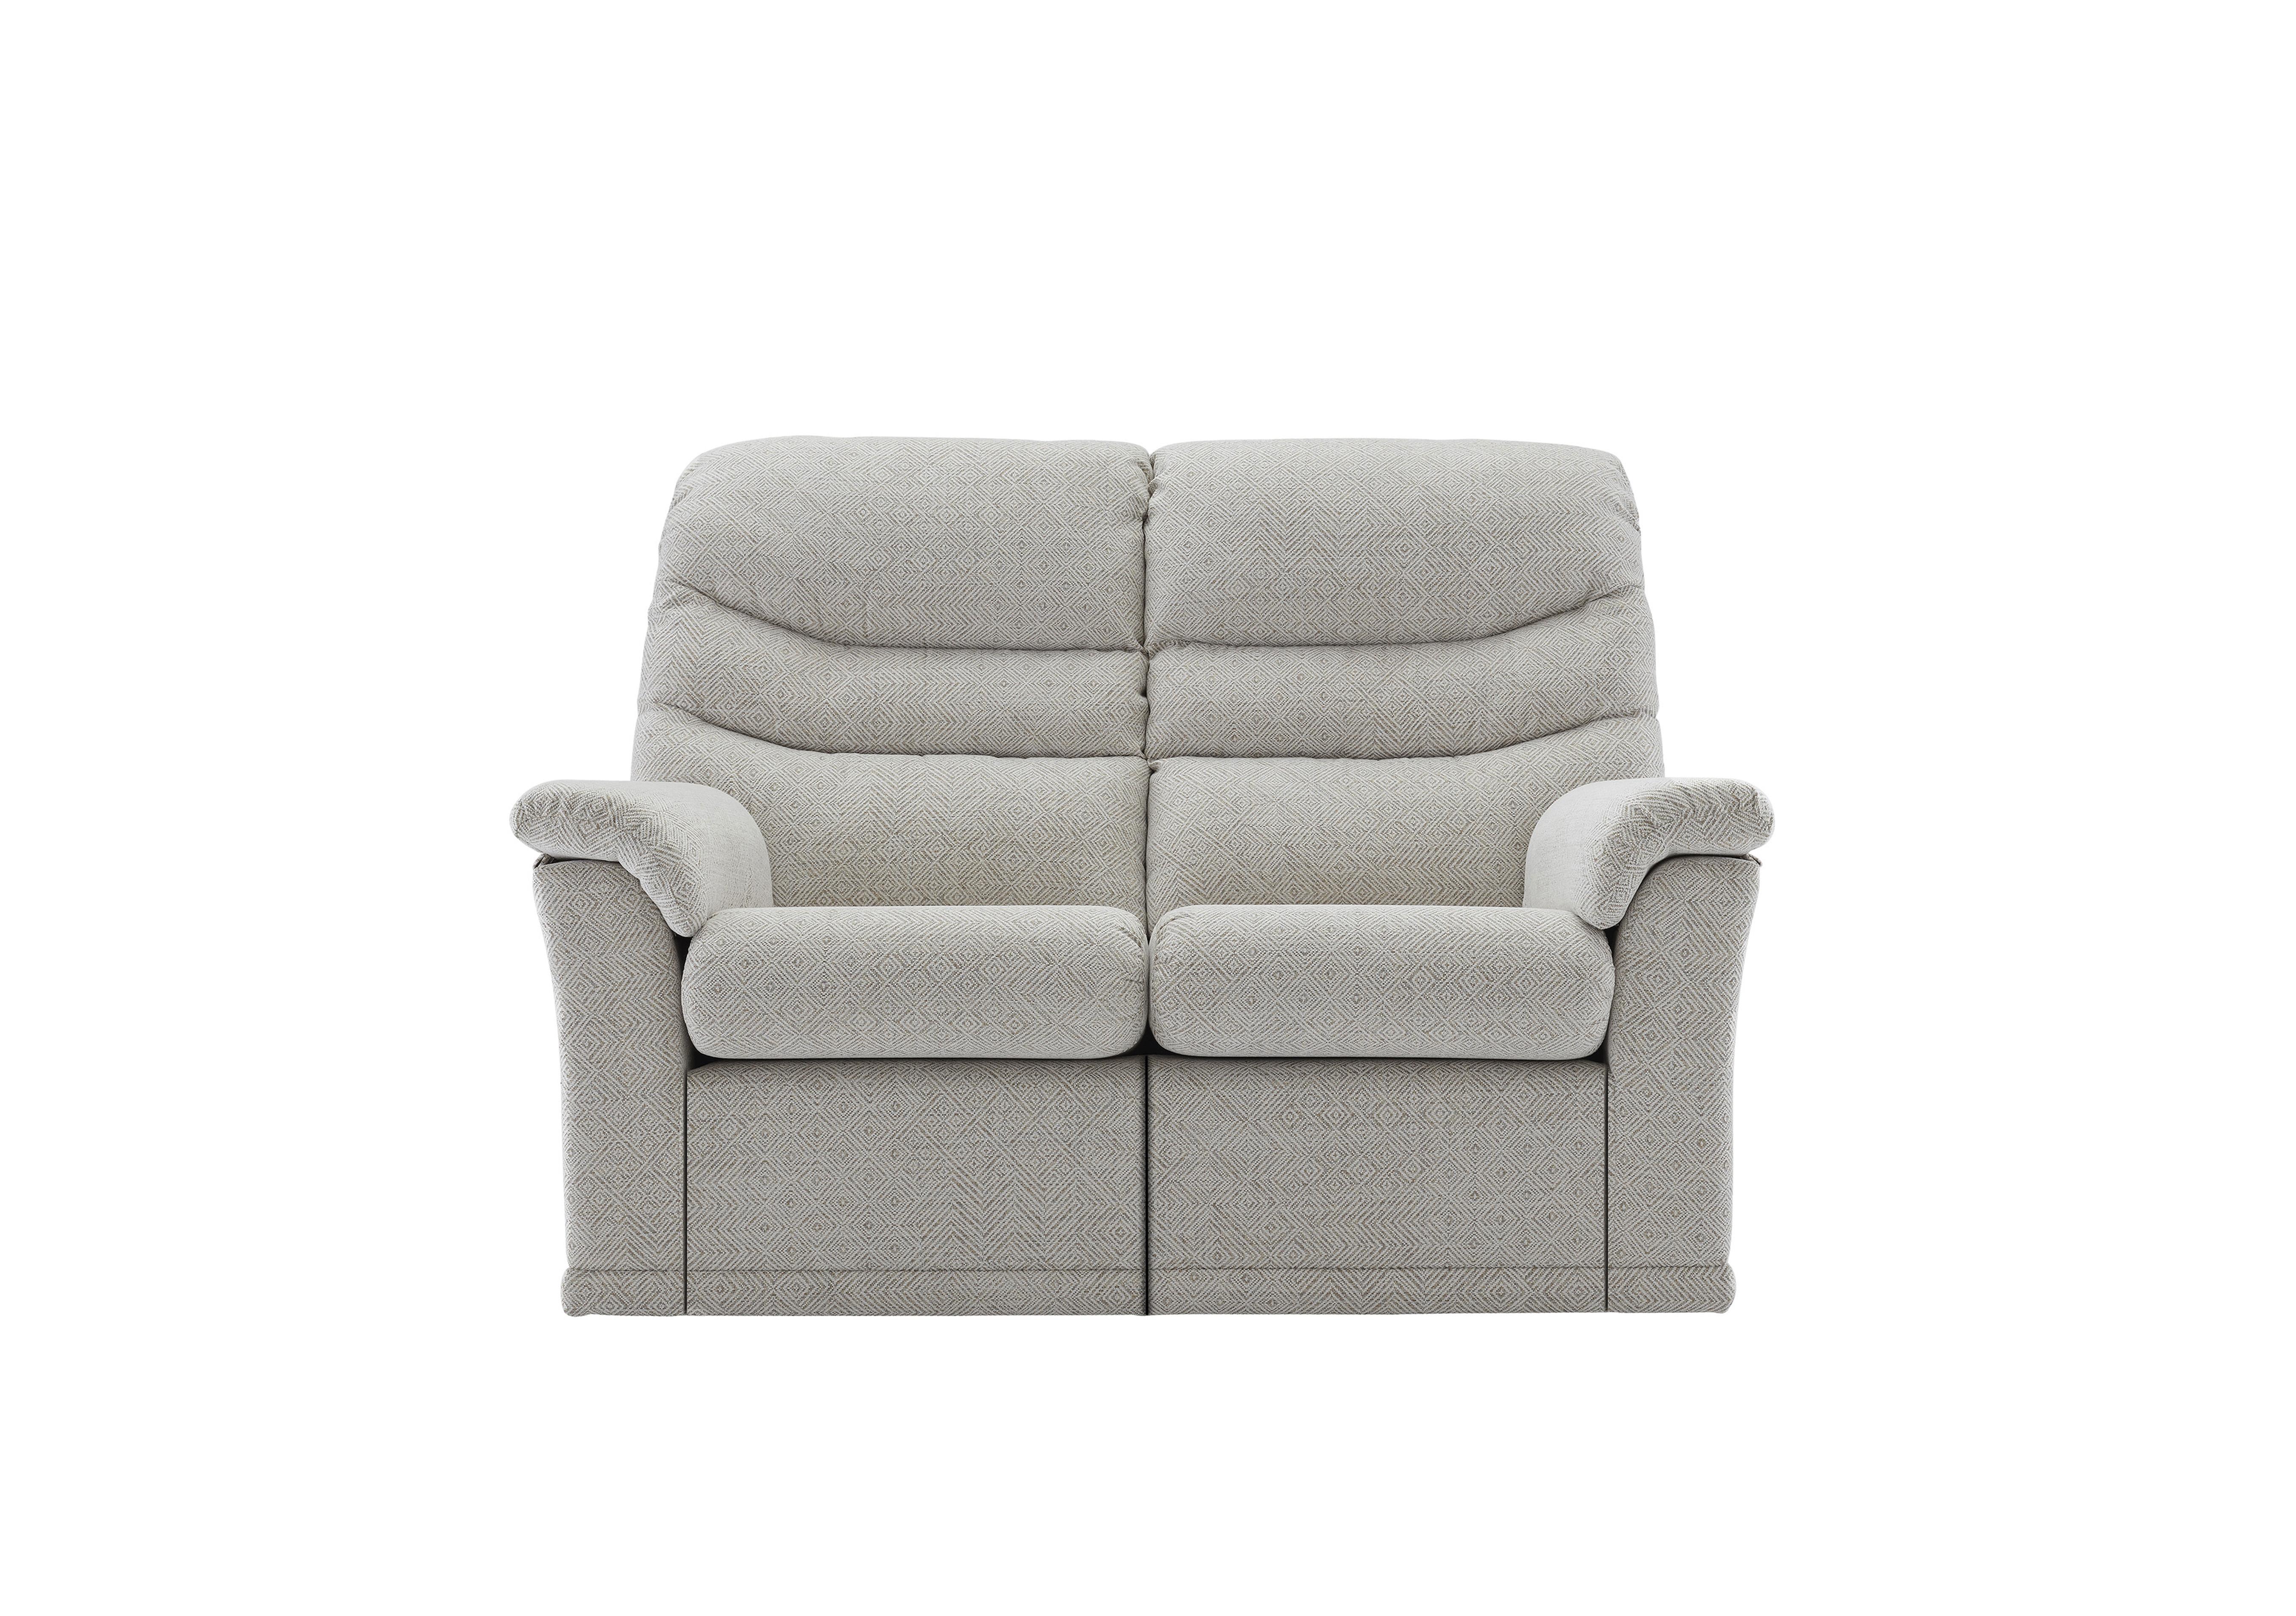 Malvern 2 Seater Fabric Sofa in B010 Nebular Pebble on Furniture Village